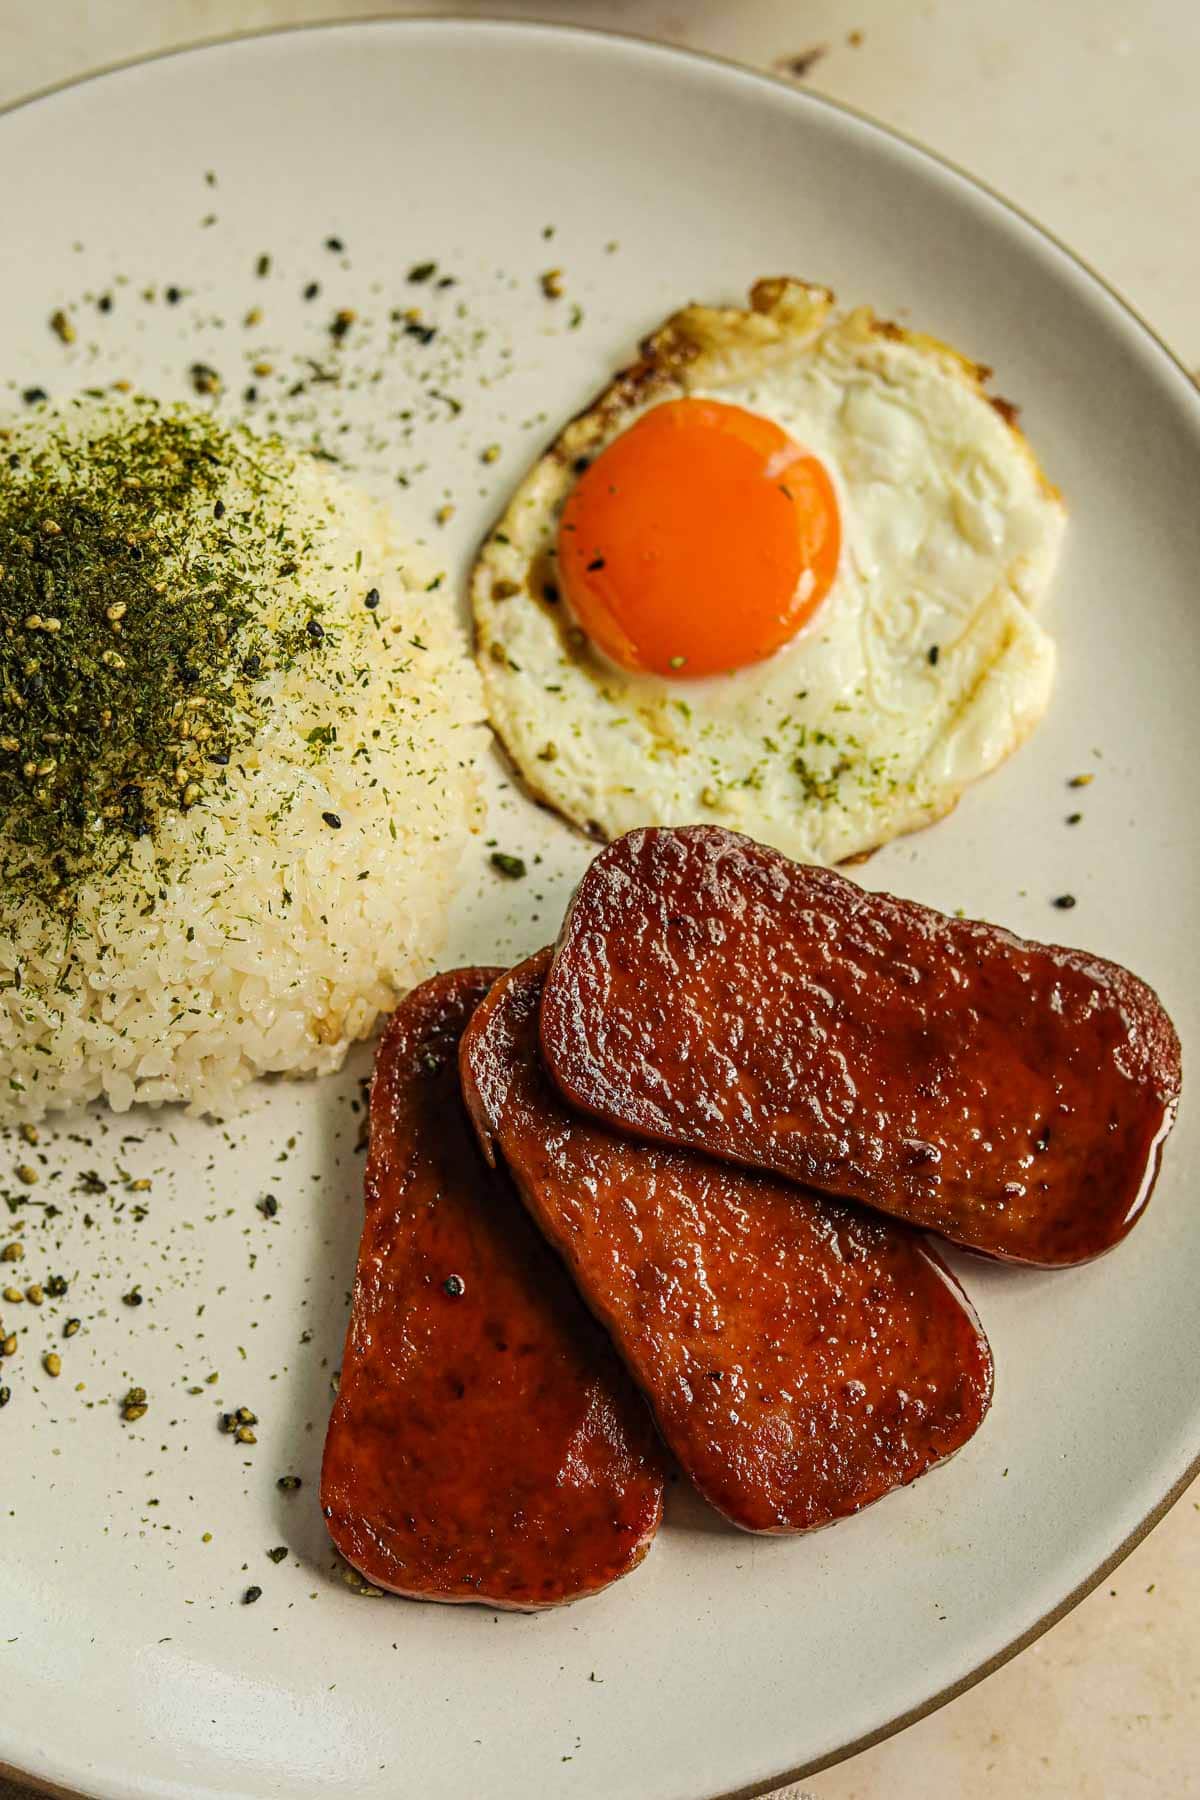 Yolky egg, rice, and fried Spam with homemade teriyaki sauce.